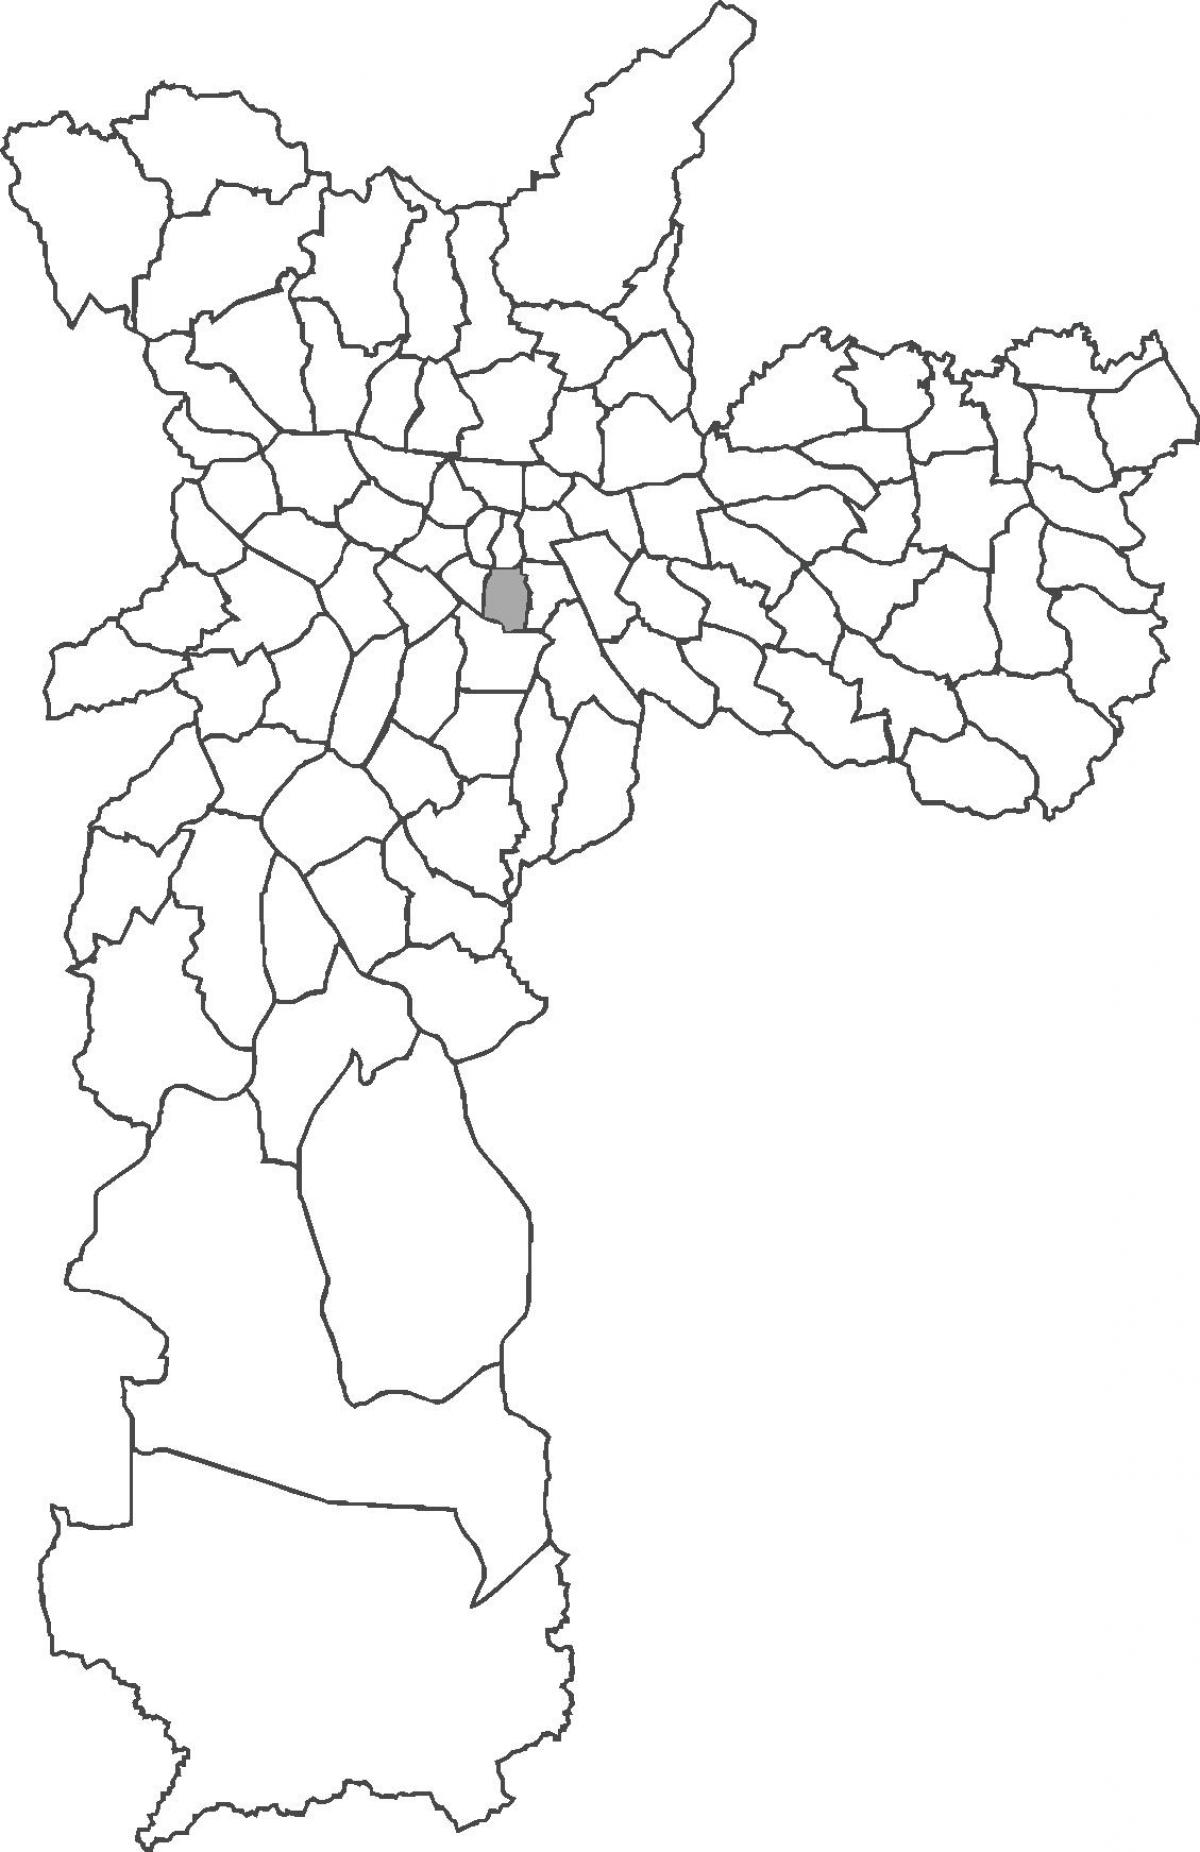 Քարտեզ Либердаде շրջան